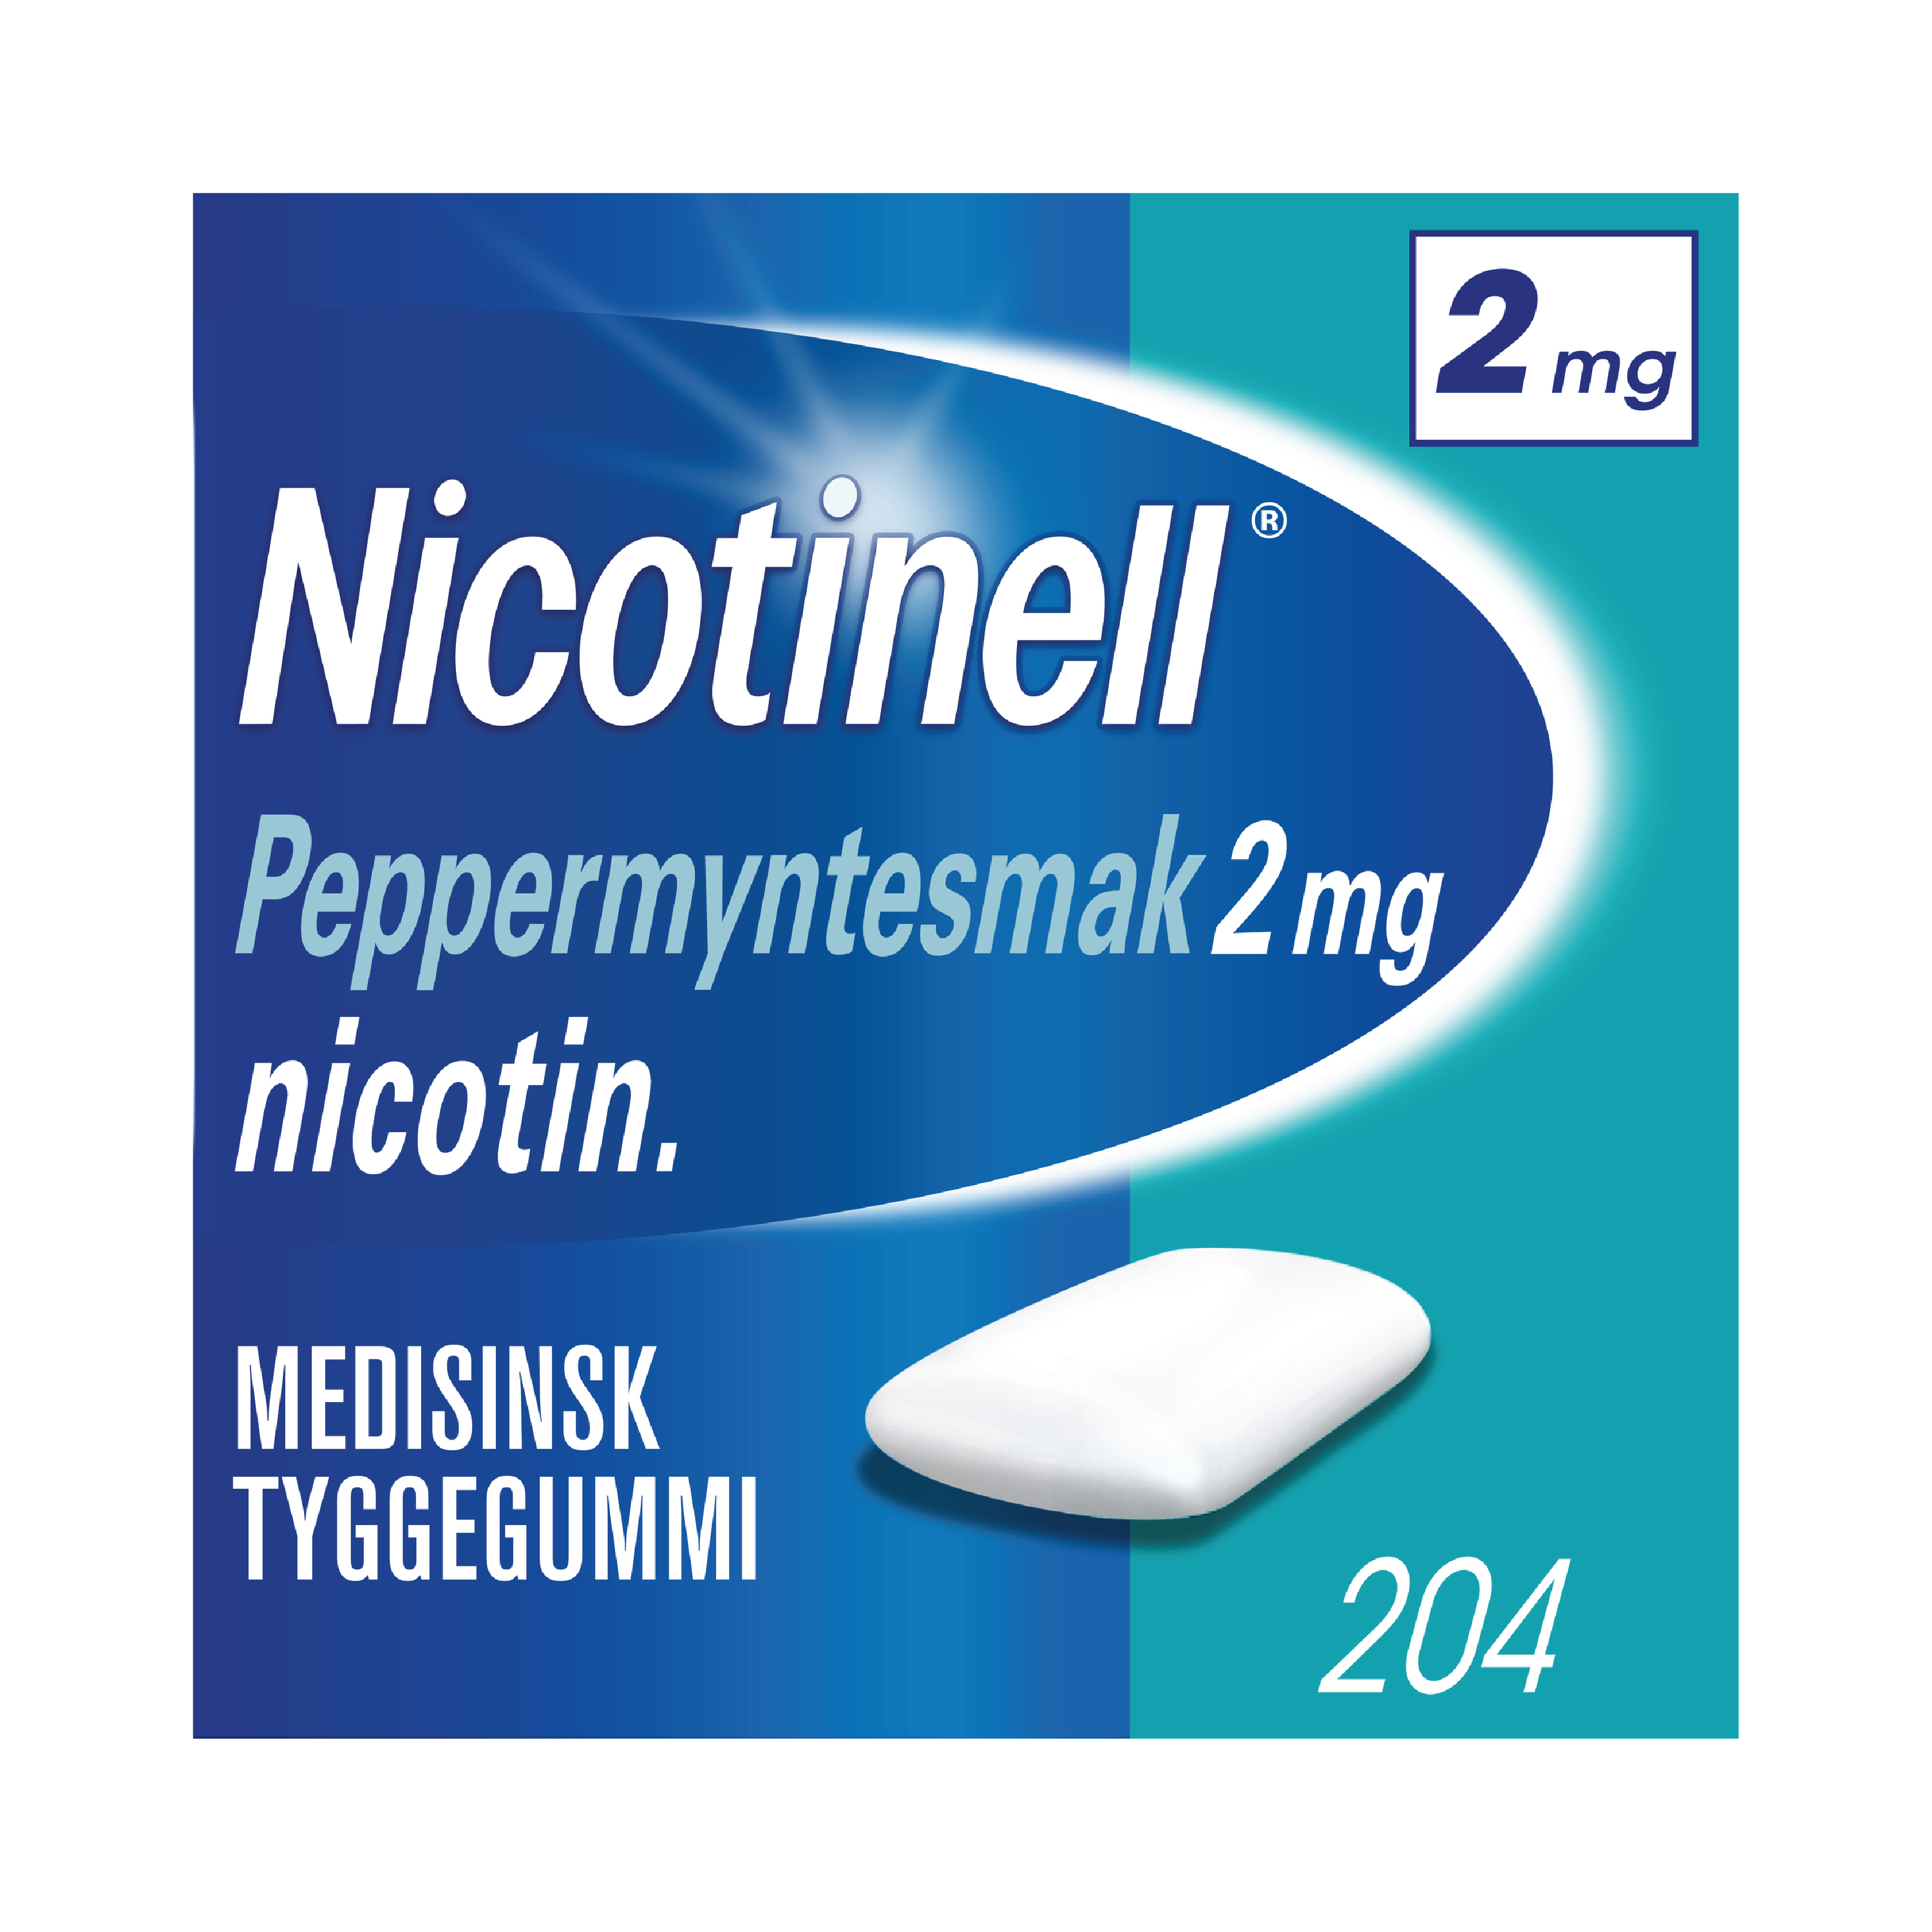 Nicotinell Tyggegummi 2mg peppermynte, 204 stk.